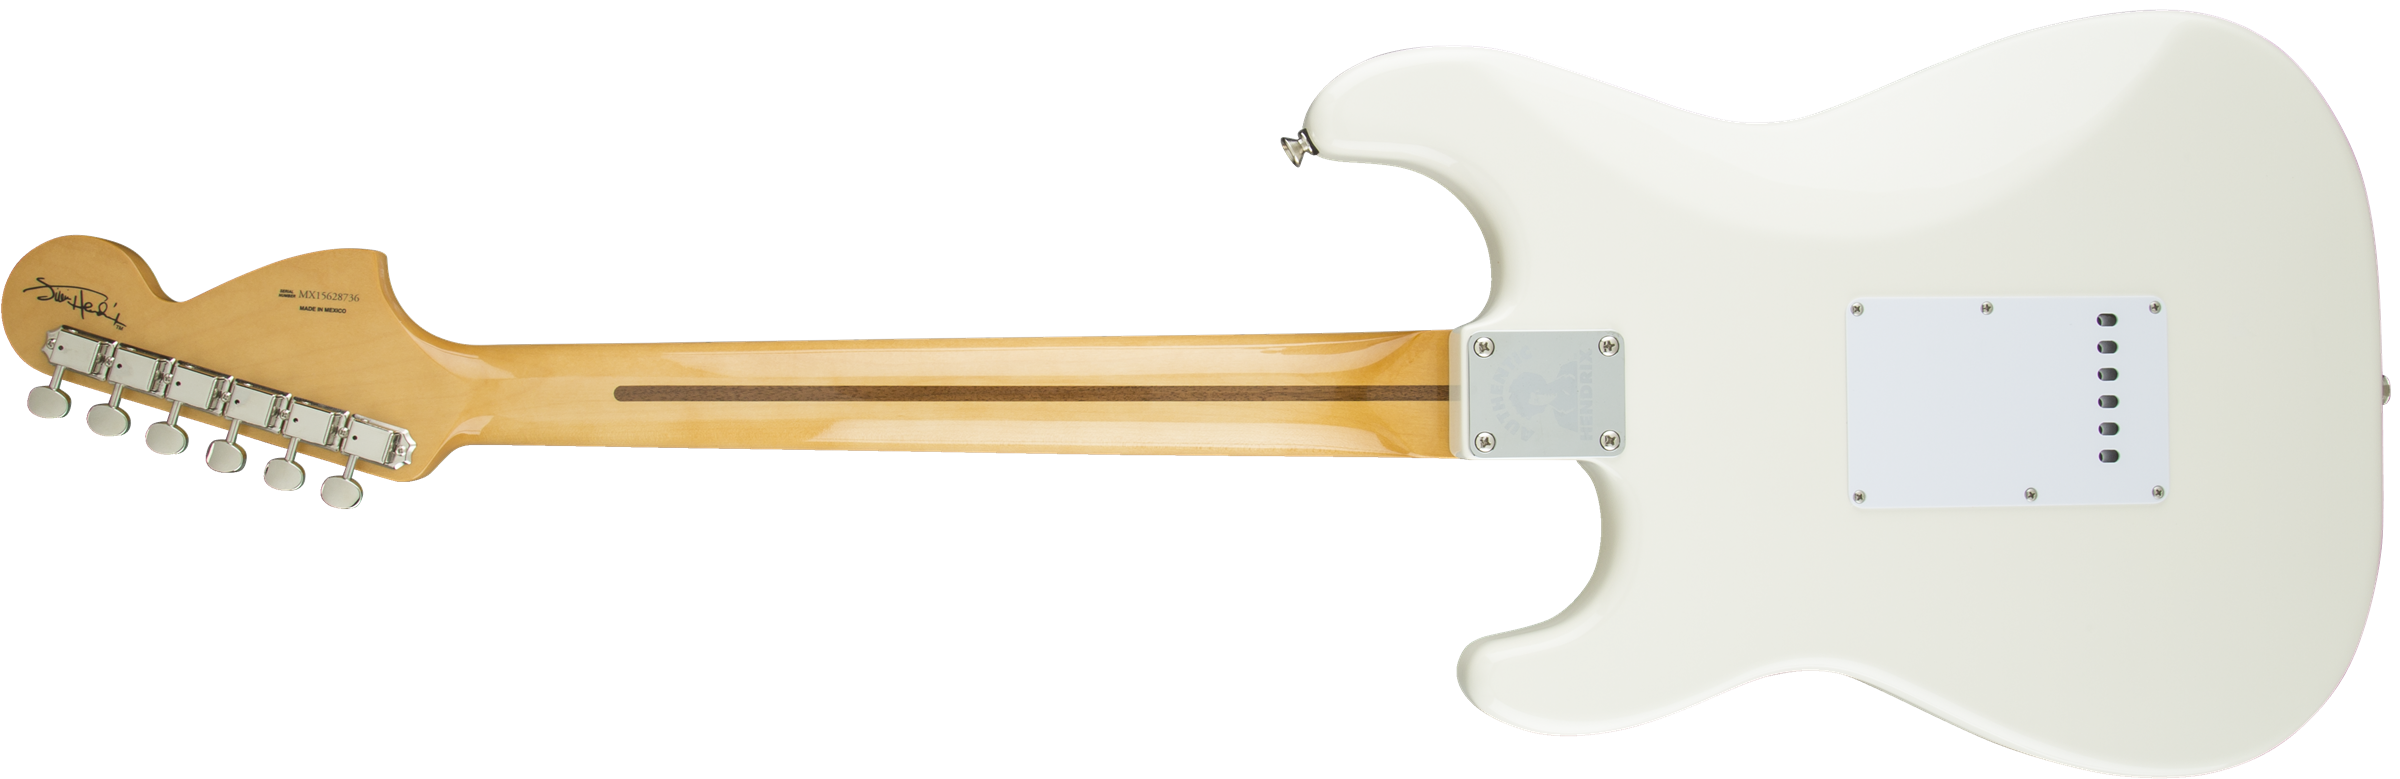 Fender Jimi Hendrix Stratocaster (mex, Mn) - Olympic White - E-Gitarre in Str-Form - Variation 1